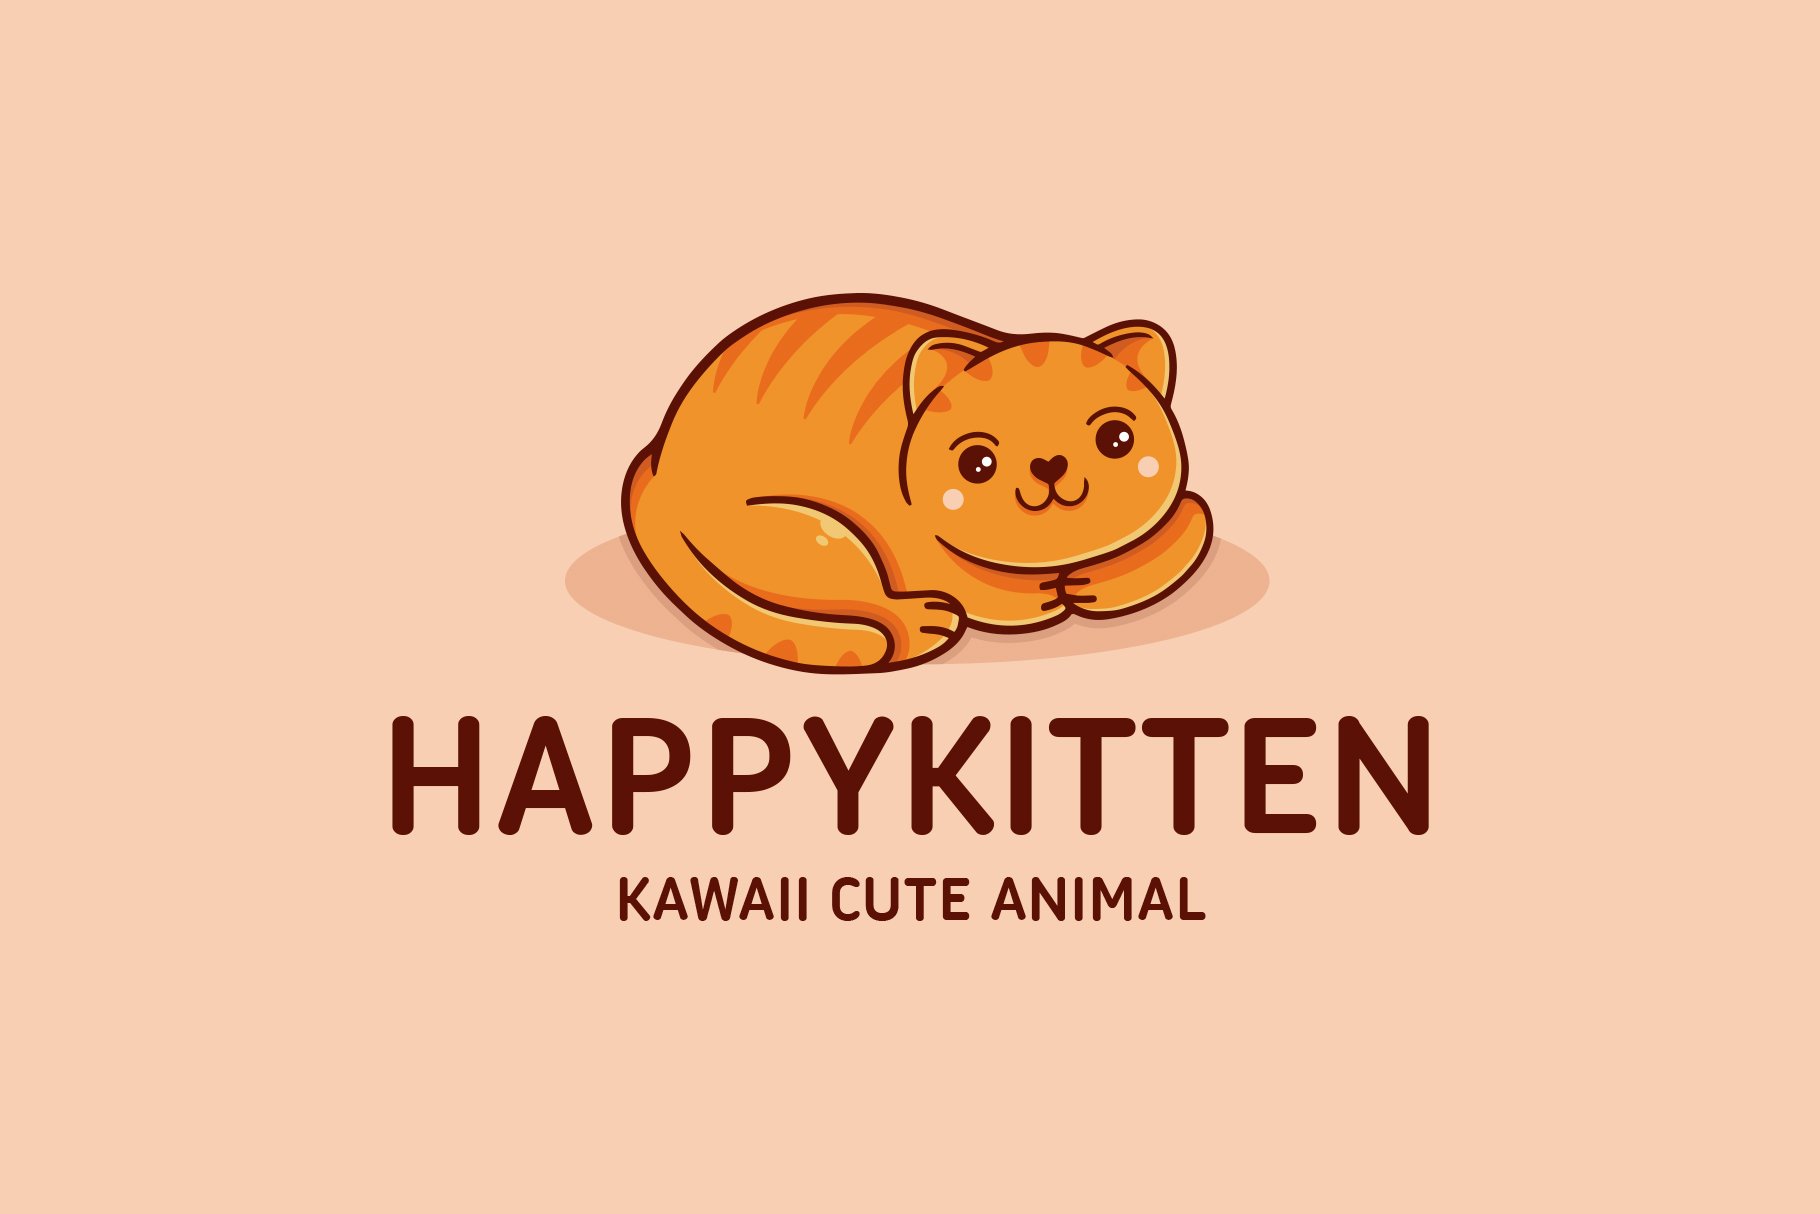 Cute Kawaii Cat Logo Template cover image.